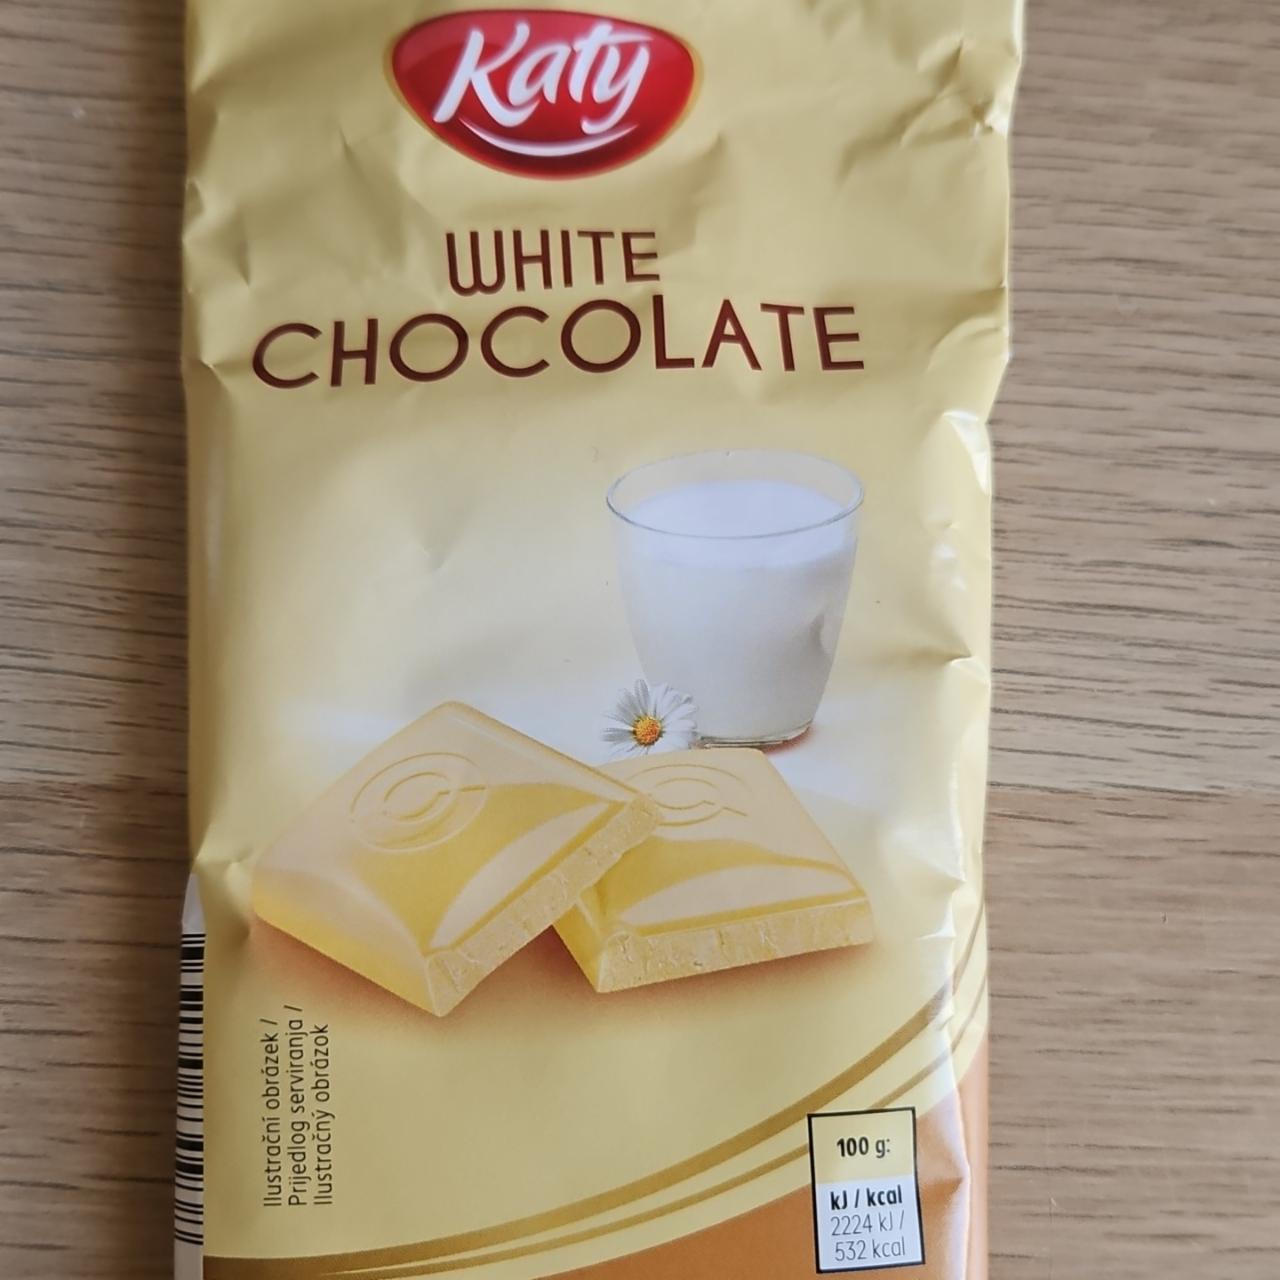 Fotografie - White Chocolate Katy